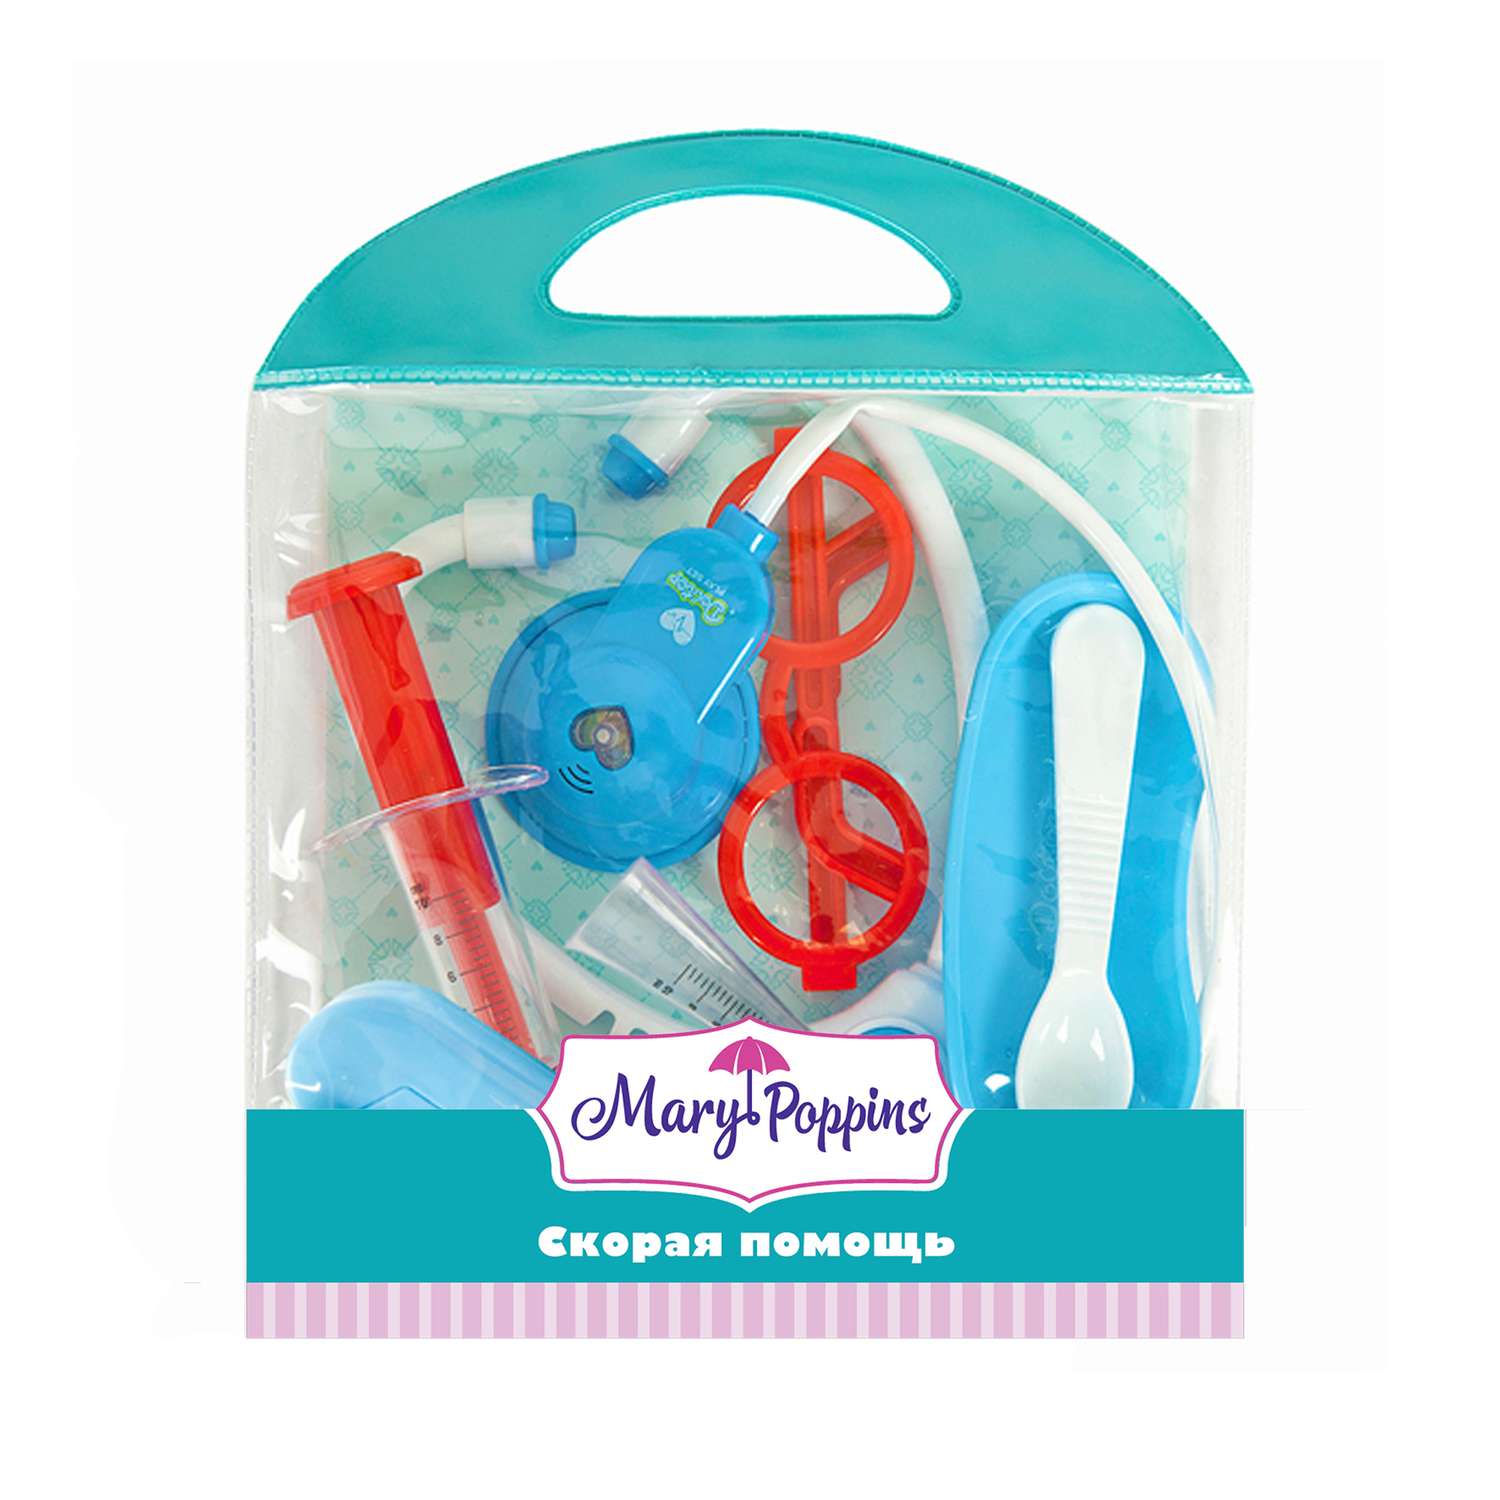 Медицинский набор Mary Poppins Скорая помощь 7 предметов - фото 2